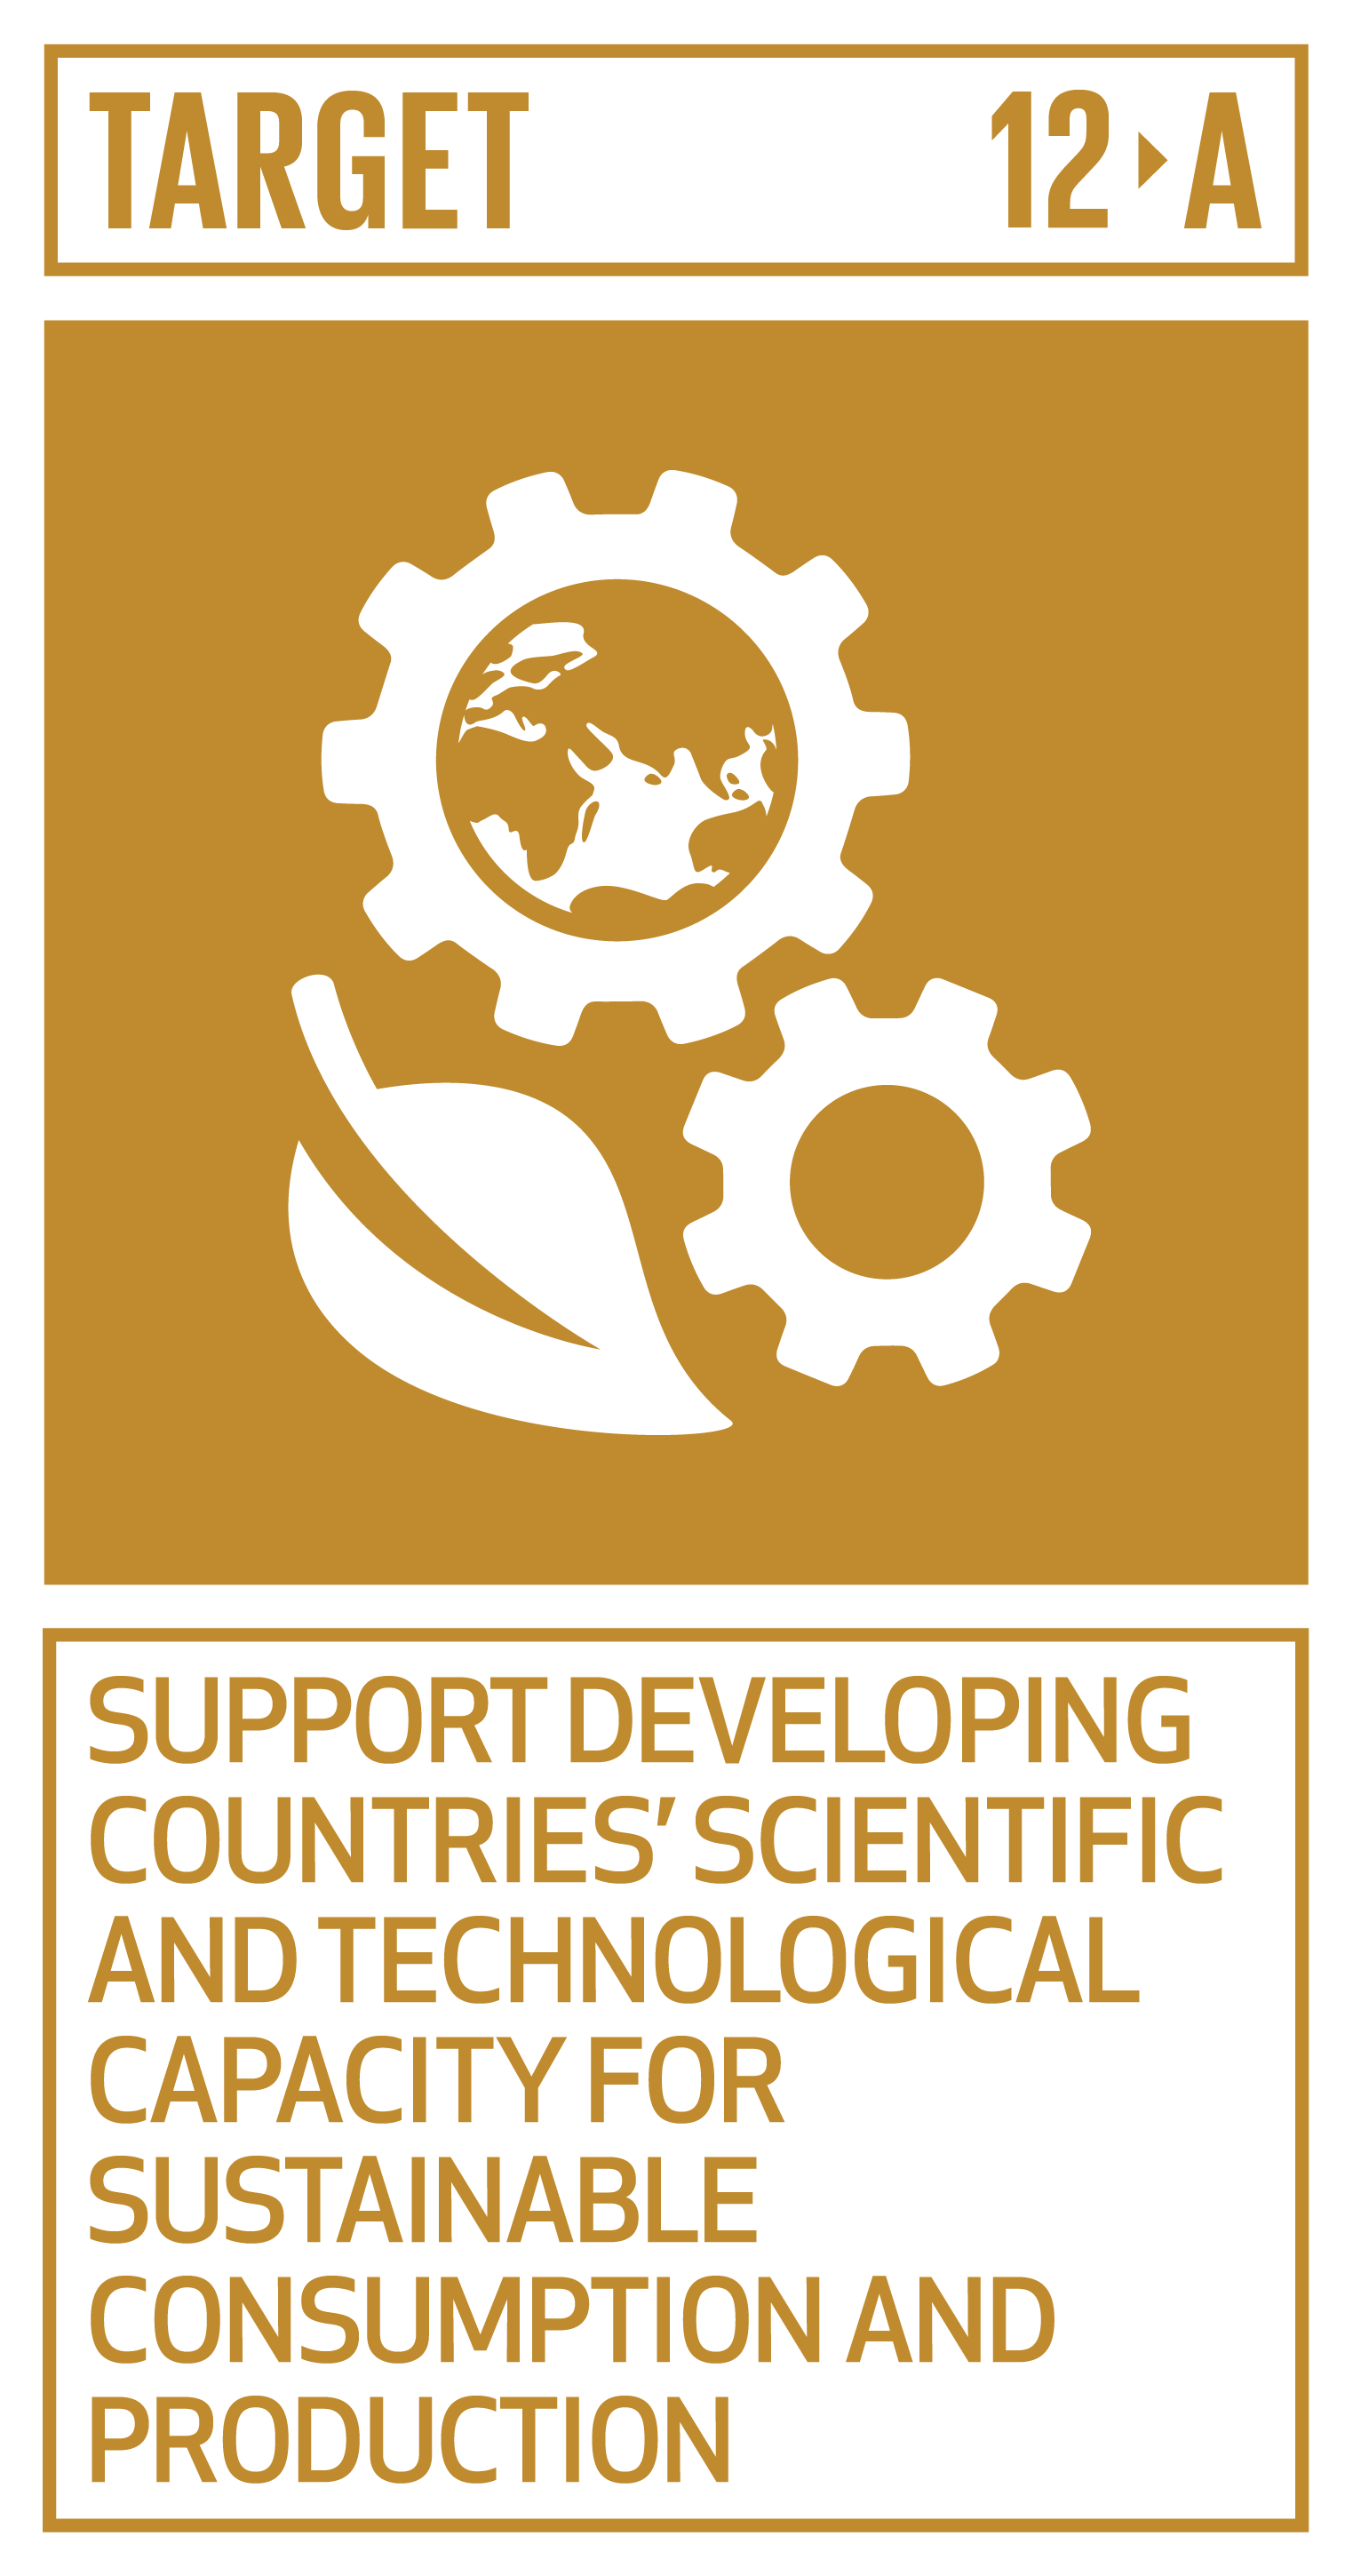 Goal,target,永續發展目標SDGs12, 目標12.A支持開發中國家永續消費和生產的科技能力